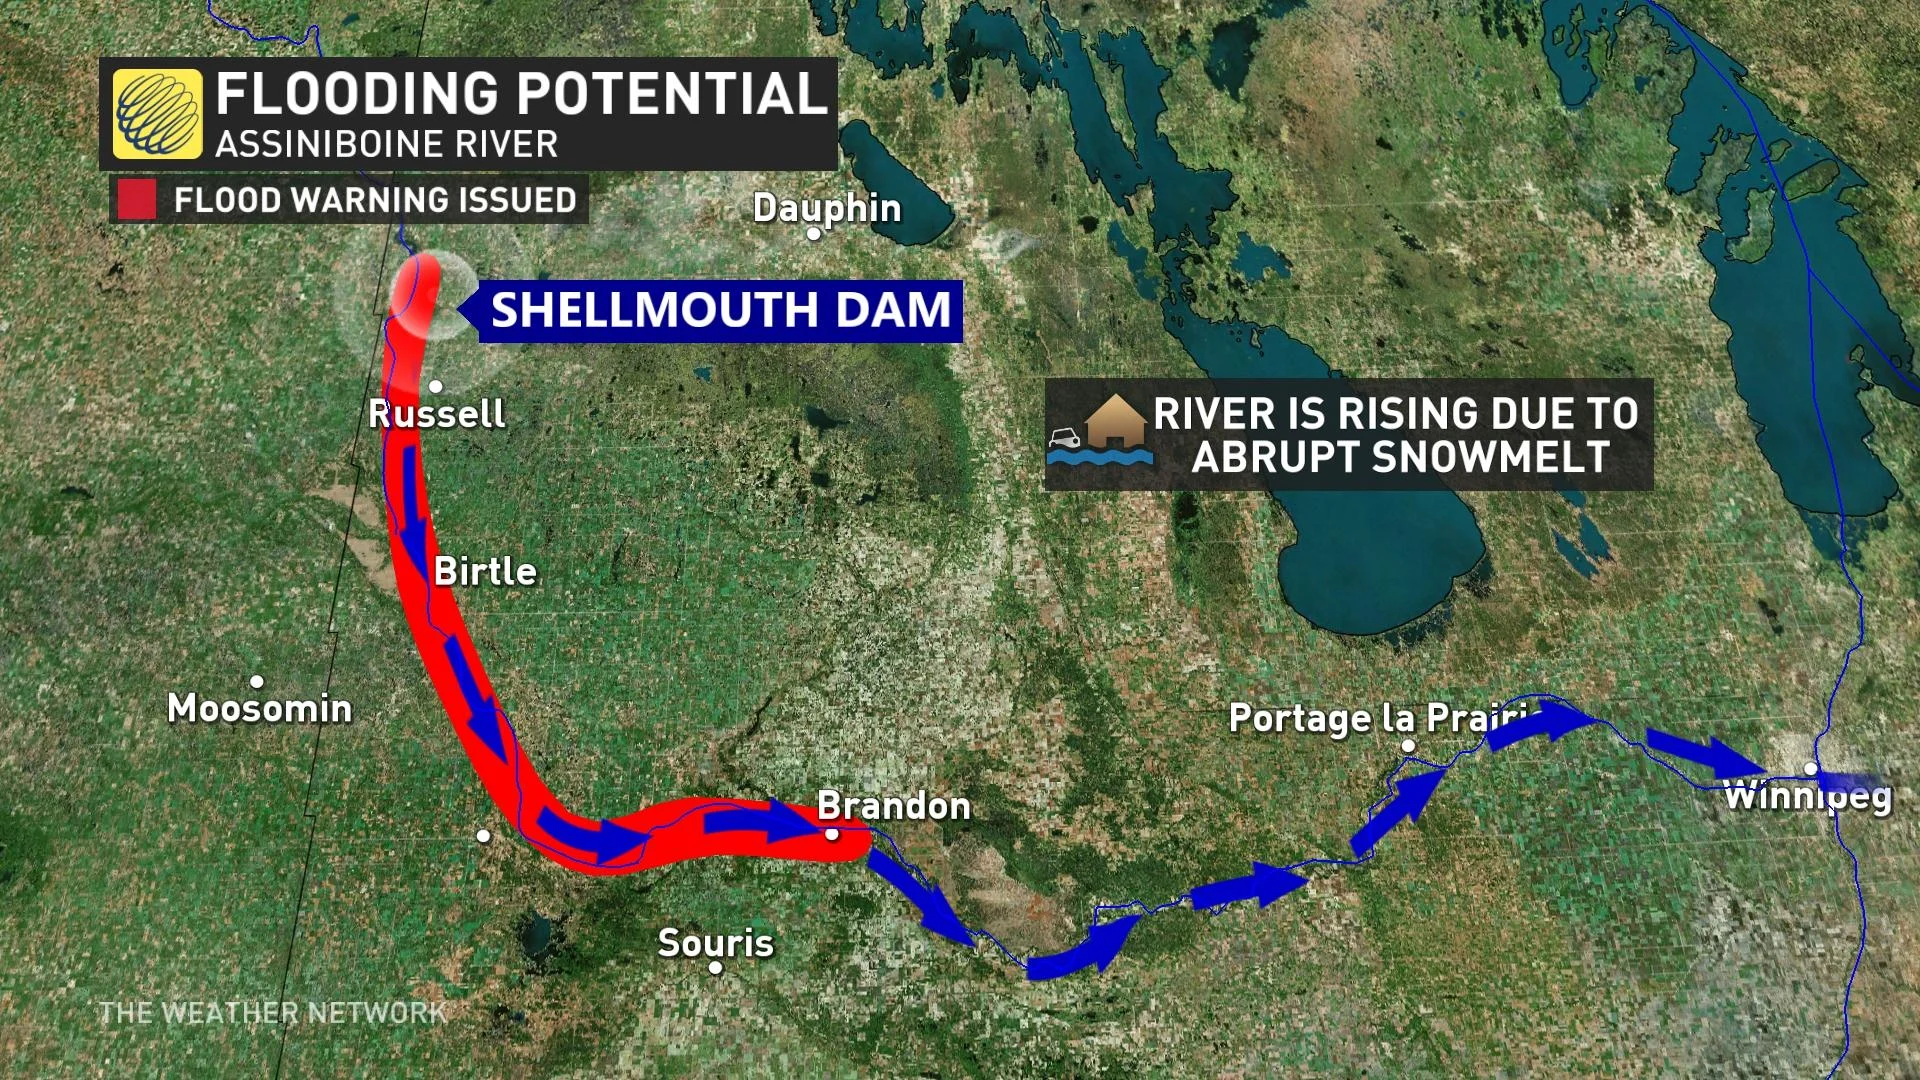 Manitoba flooding potential and warning_April 17